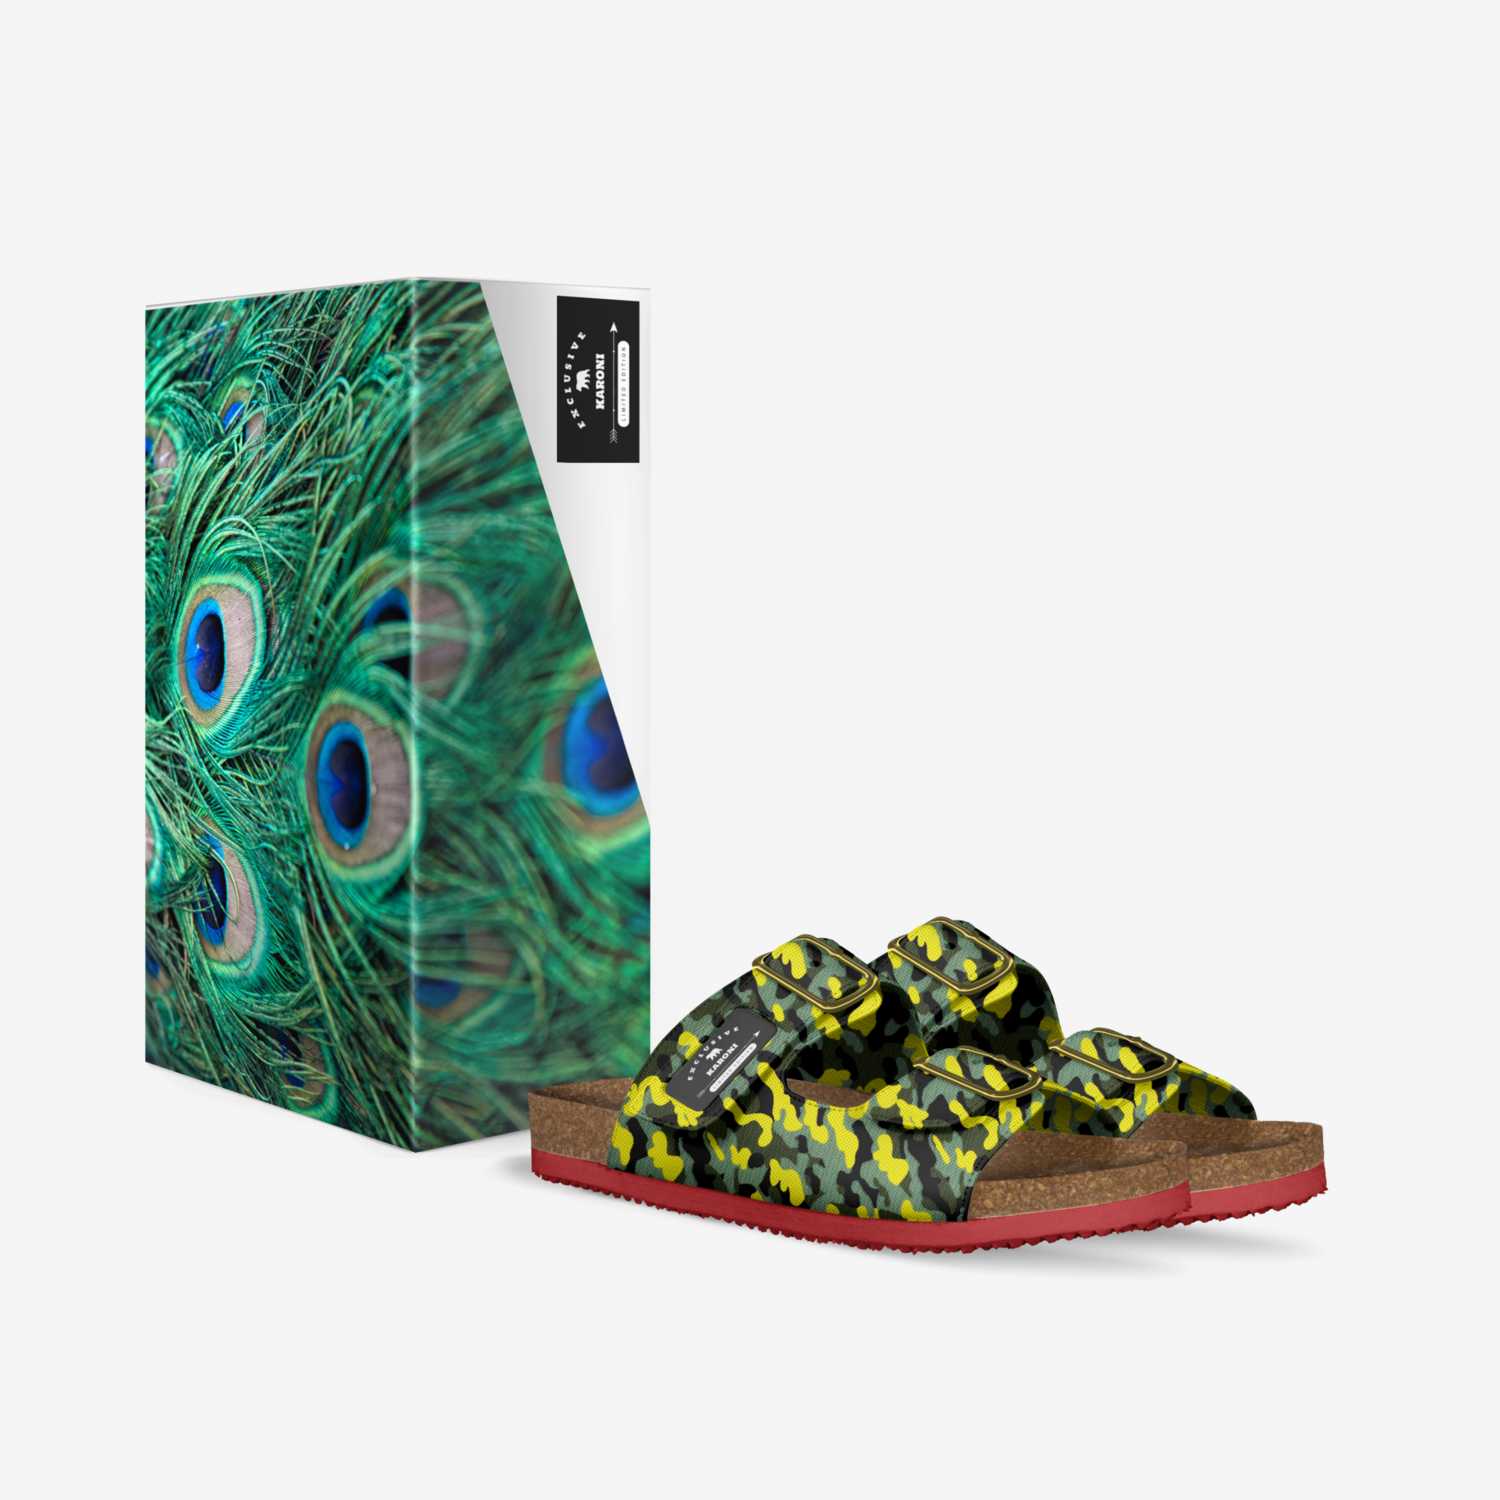 KARONI custom made in Italy shoes by Ighofimoni Joshua | Box view